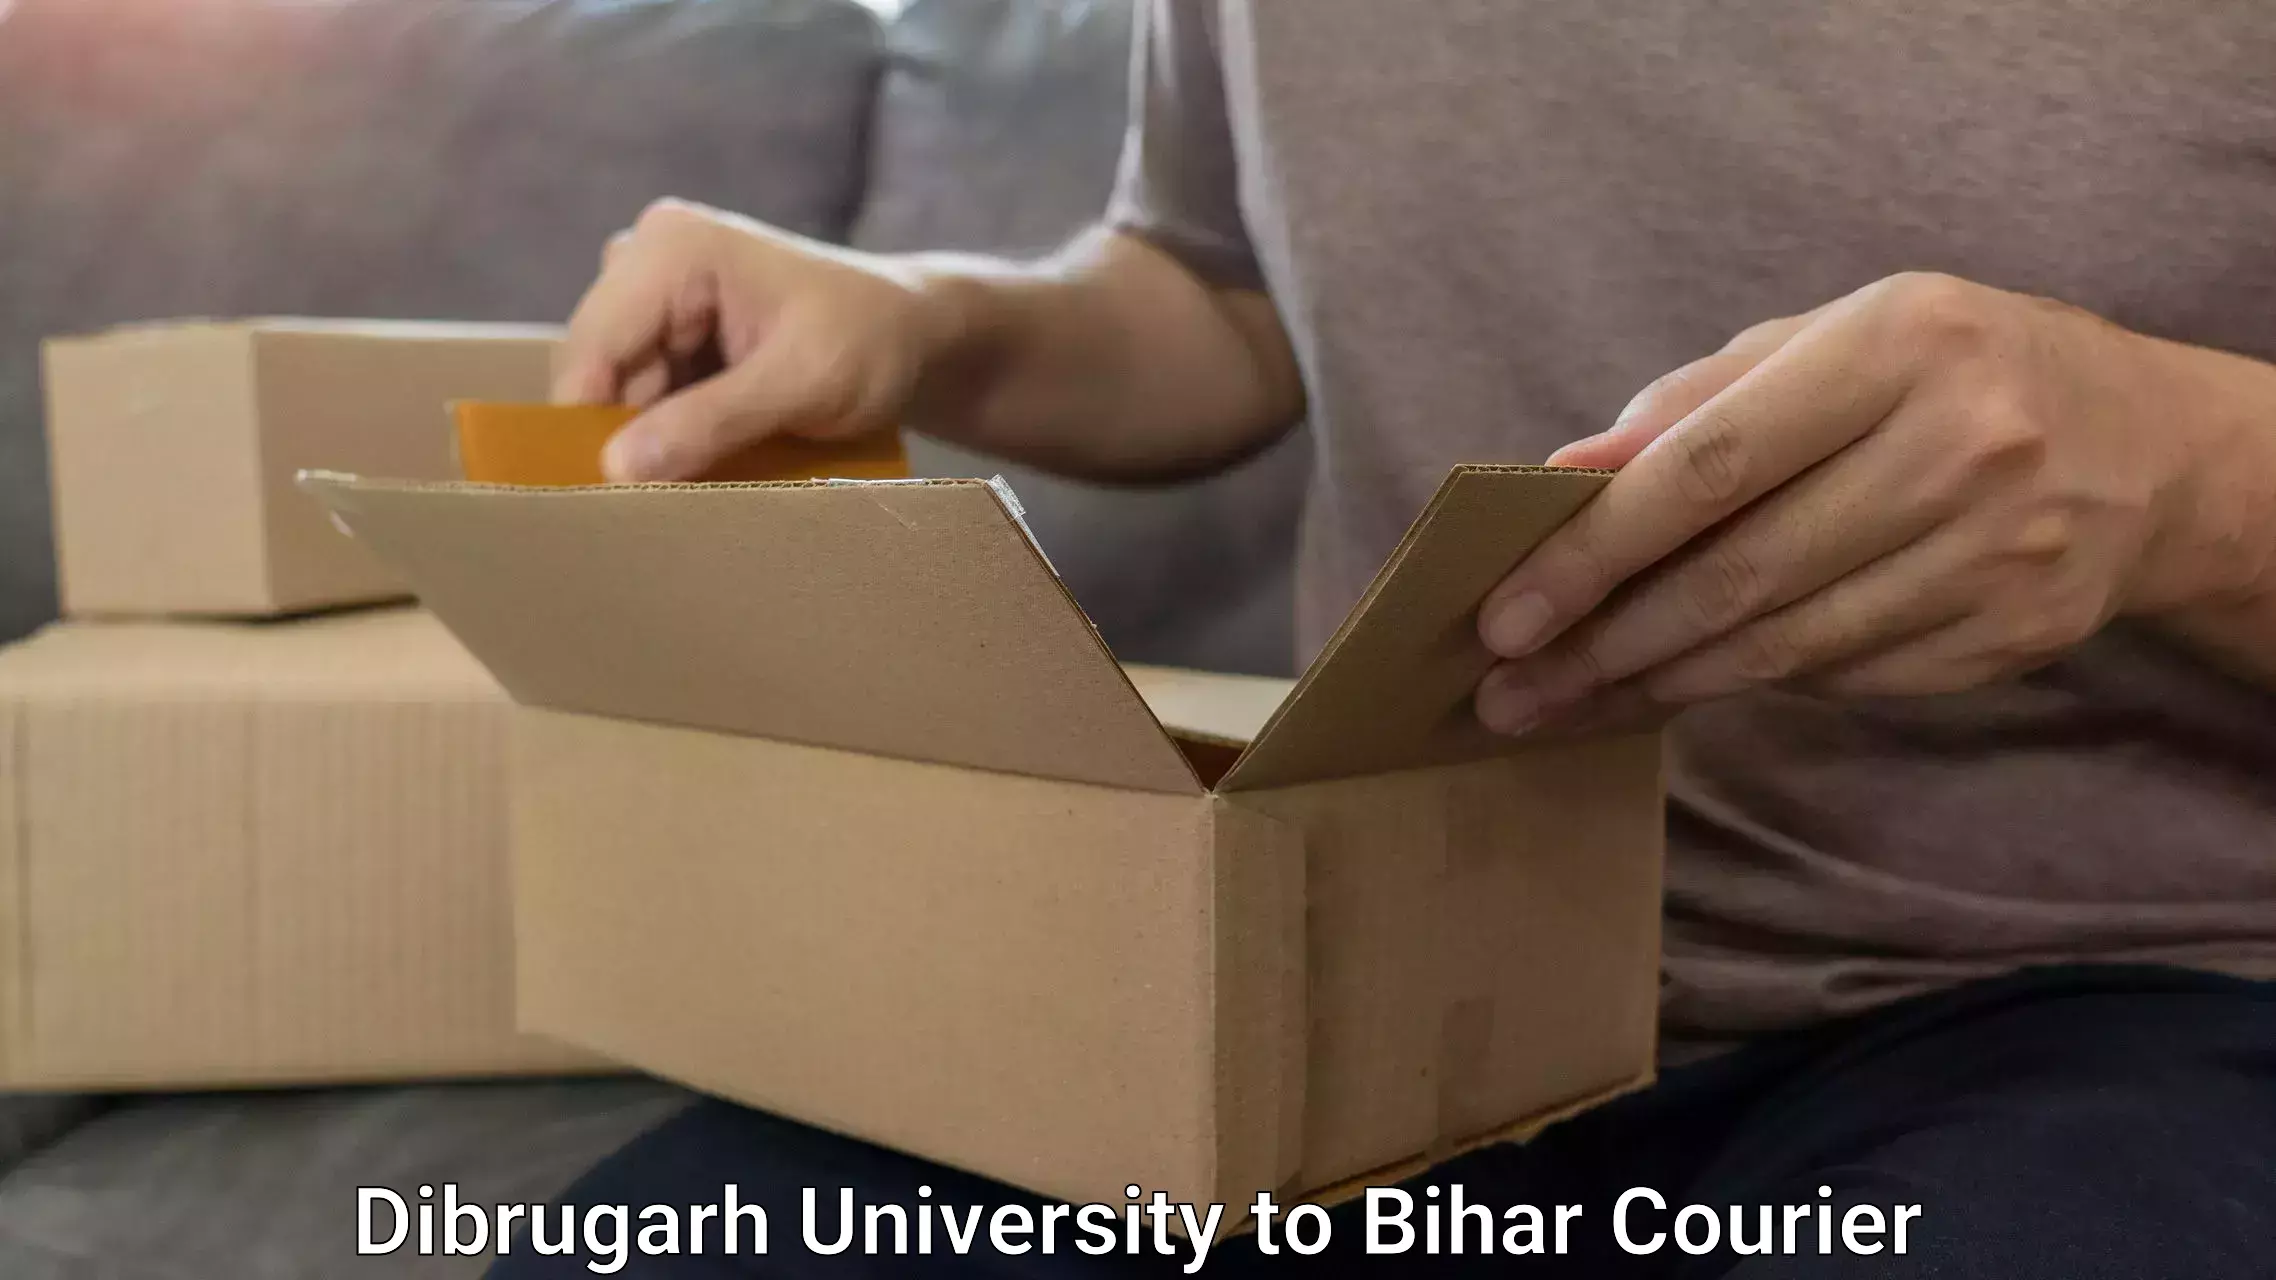 Baggage shipping service Dibrugarh University to IIIT Bhagalpur